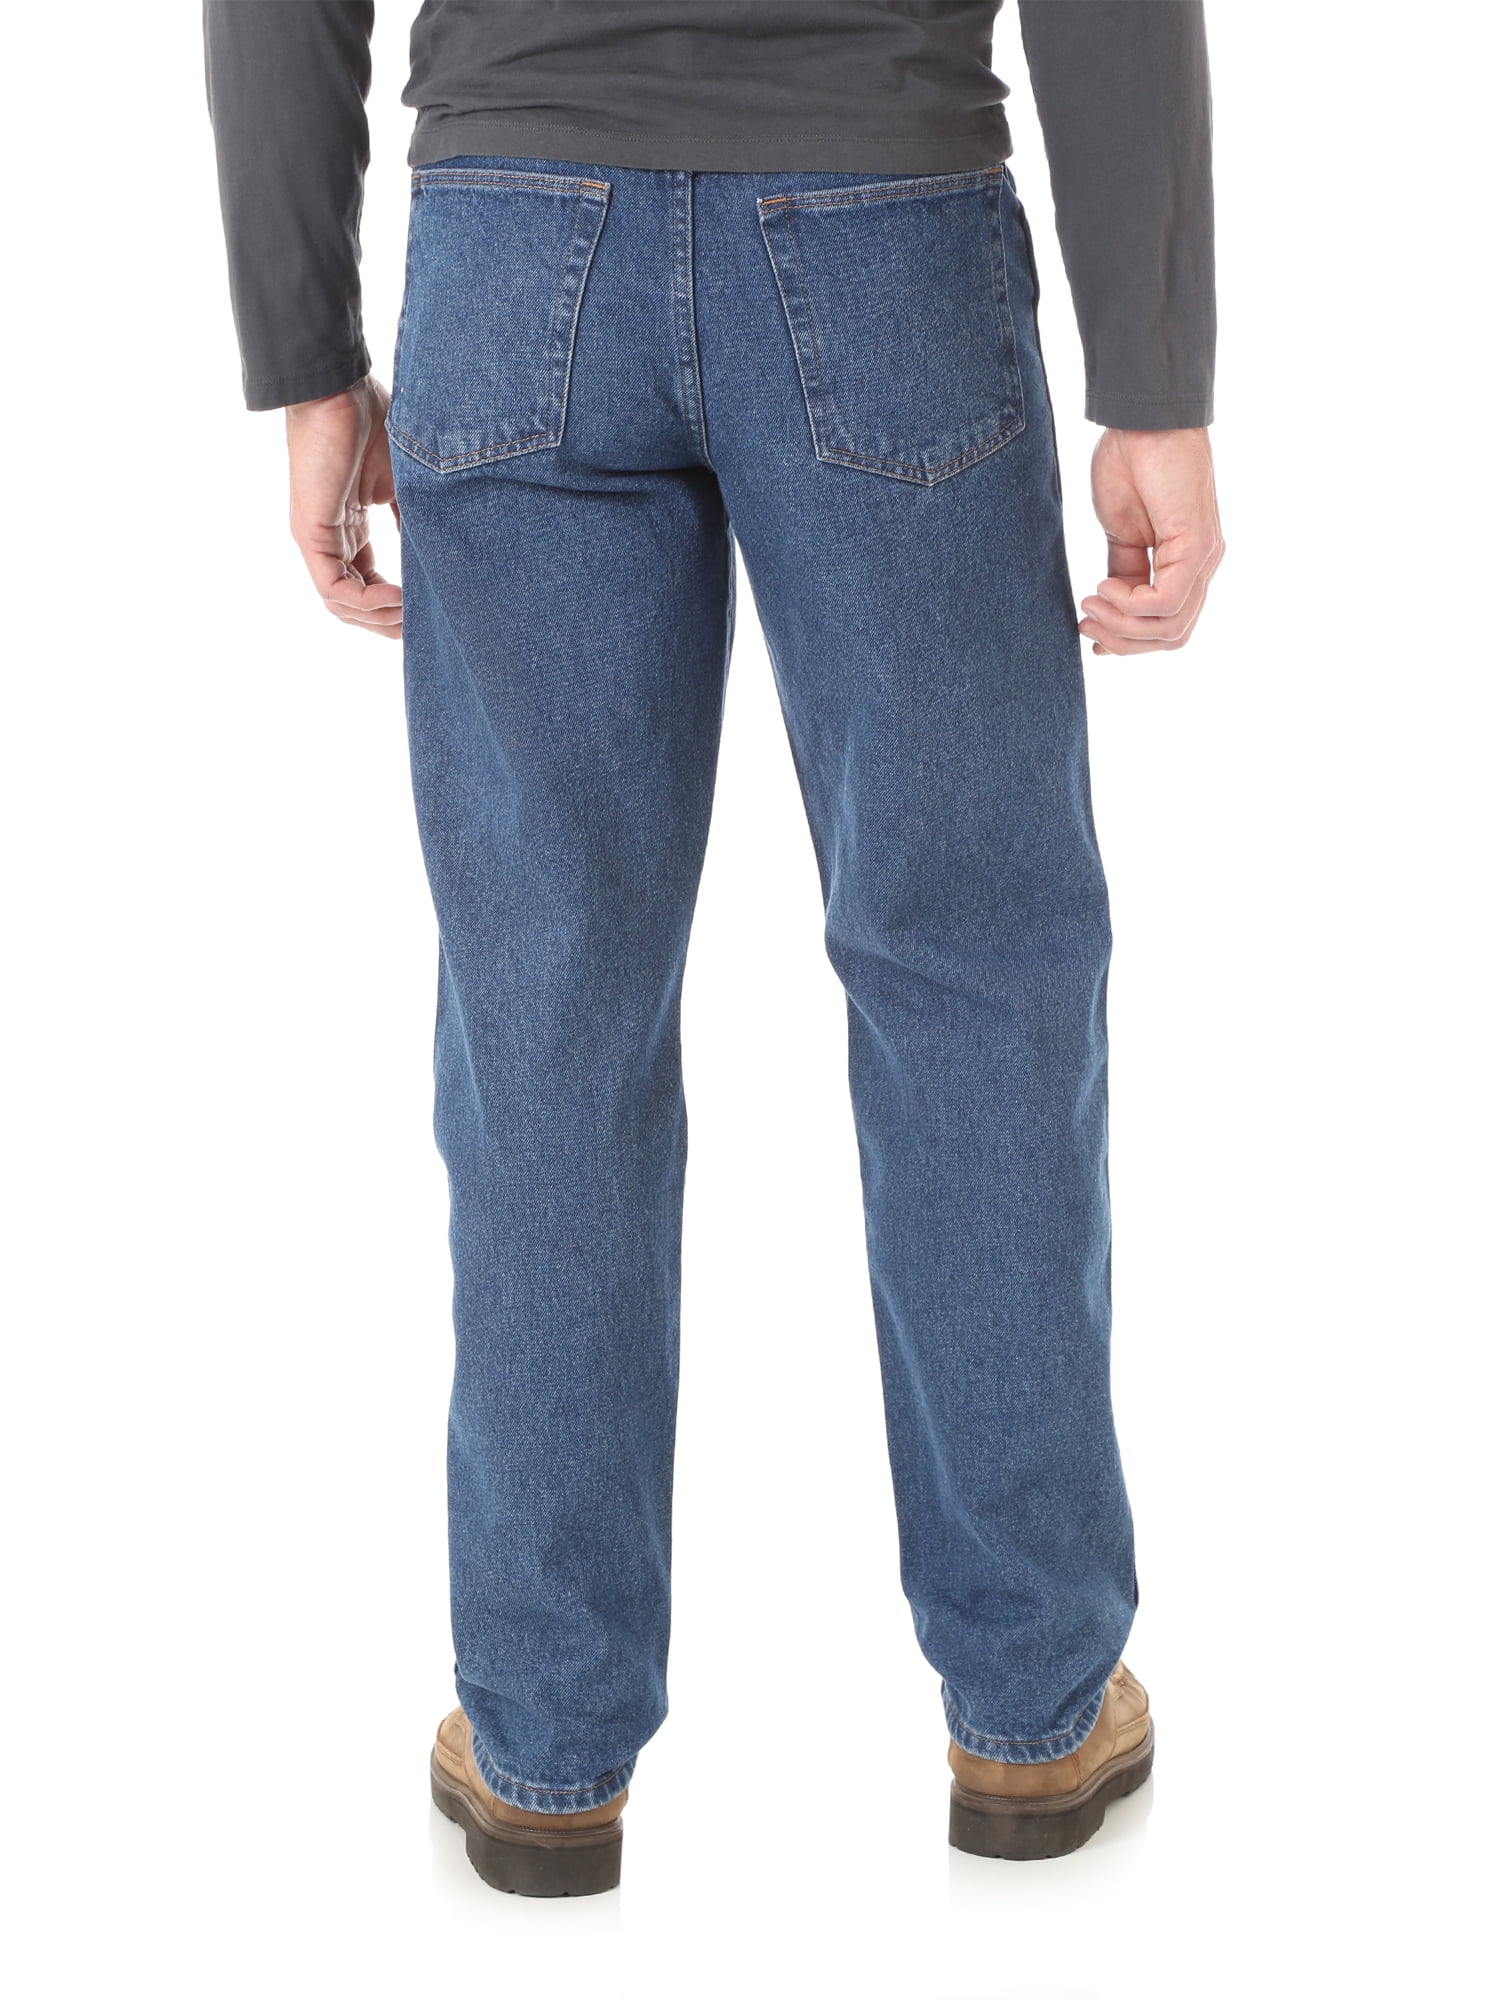 Buy Wrangler Rustler Men's and Big Men's Relaxed Fit Jeans Online at ...